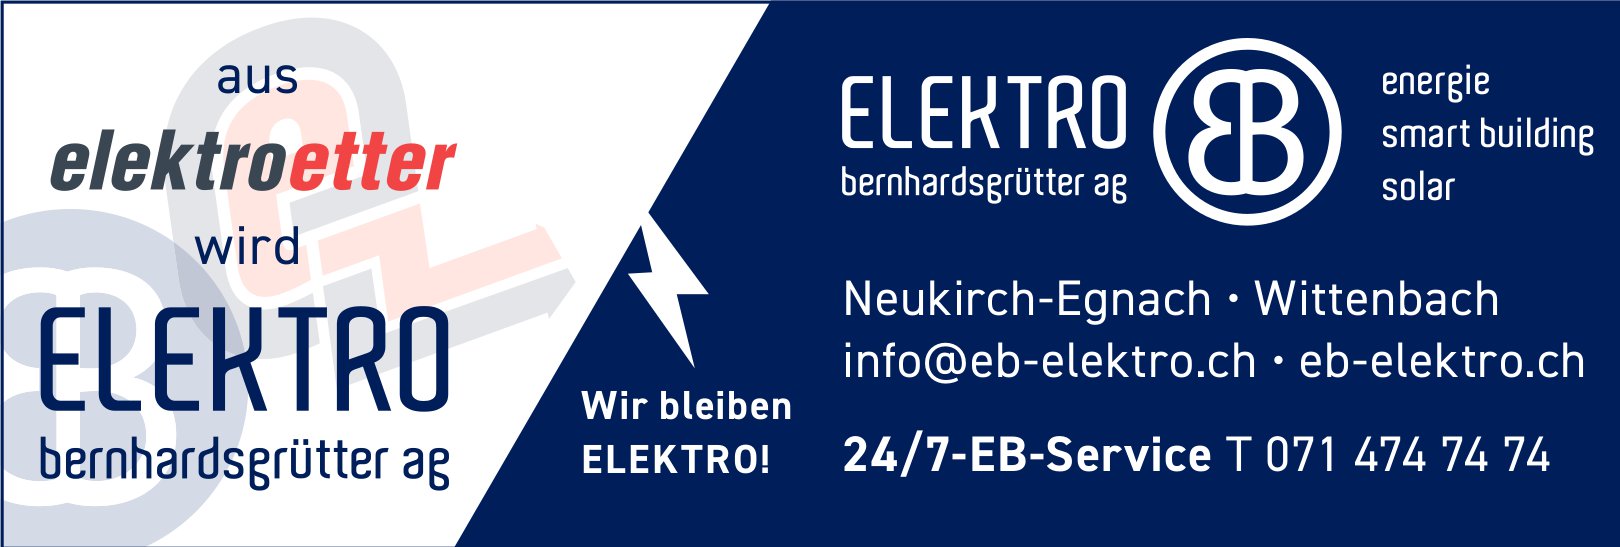 Elektro bernhardsgrütter ag, Wittenbach - aus Elektroetter wird Elektro Bernhardsgrütter AG